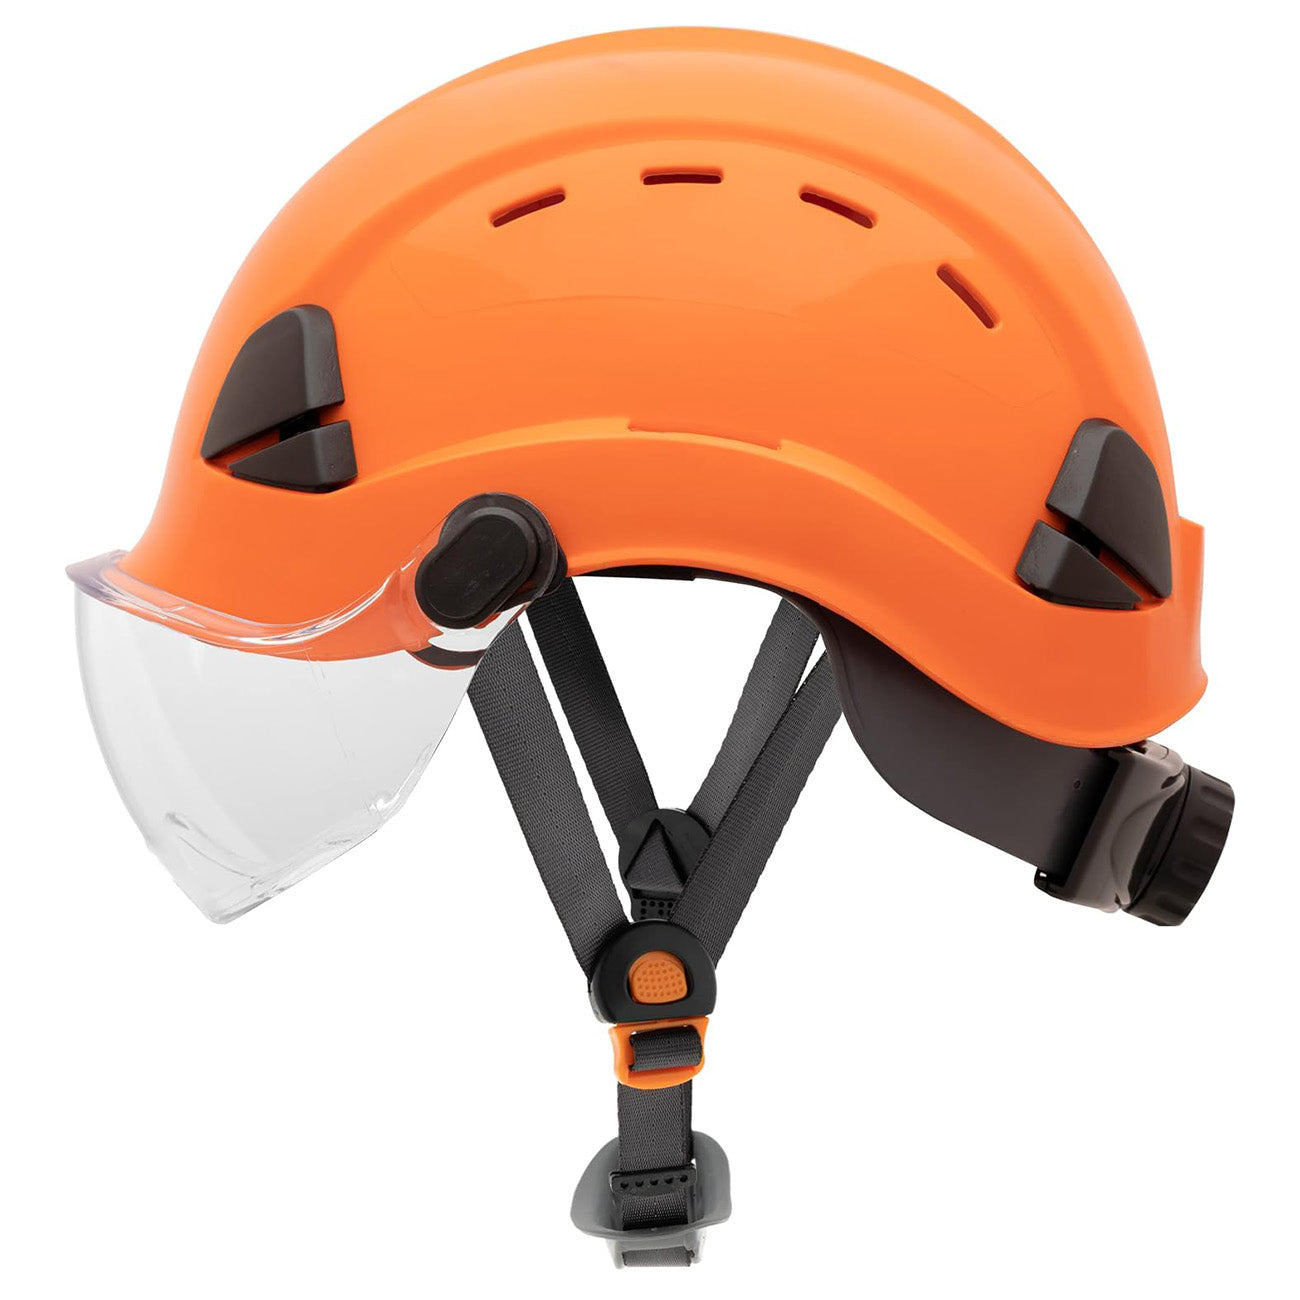 Honeywell Fibre Metal Safety Helmet Vented Orange side